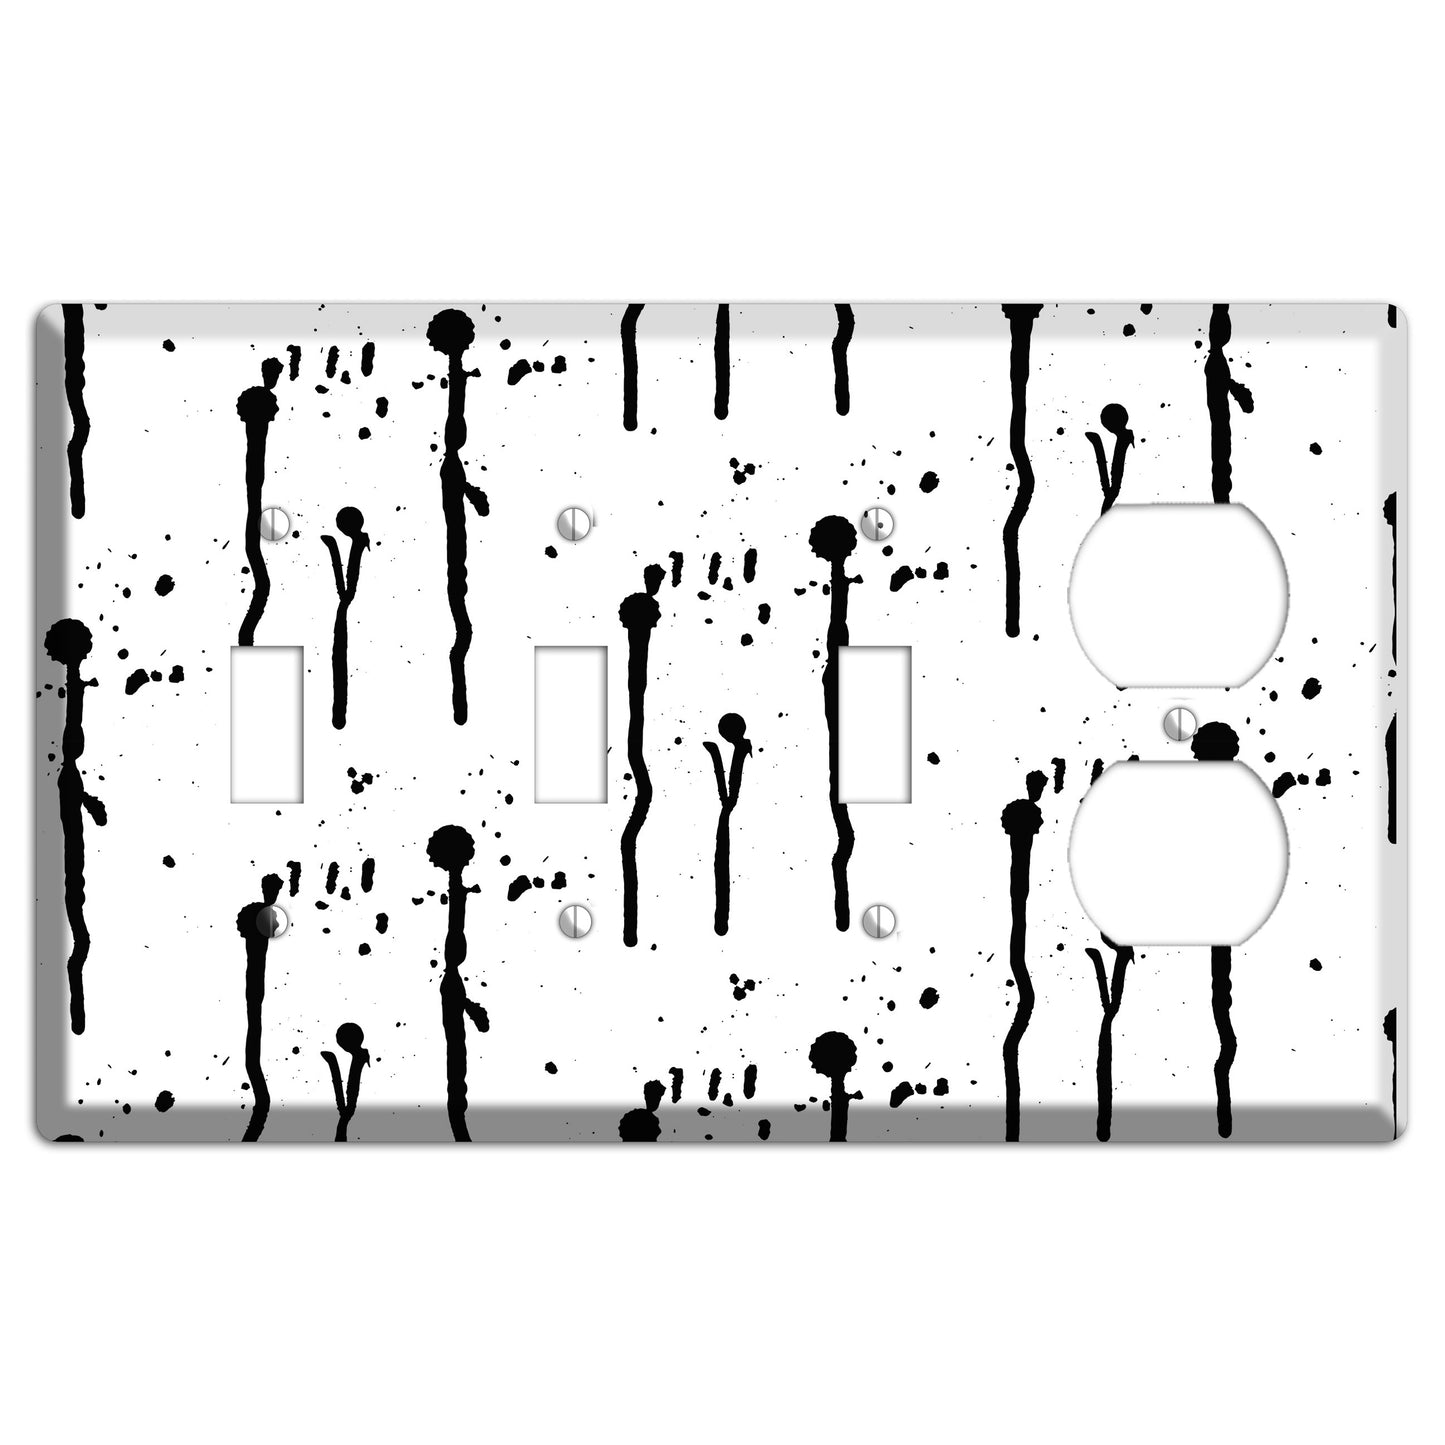 Ink Drips 5 3 Toggle / Duplex Wallplate